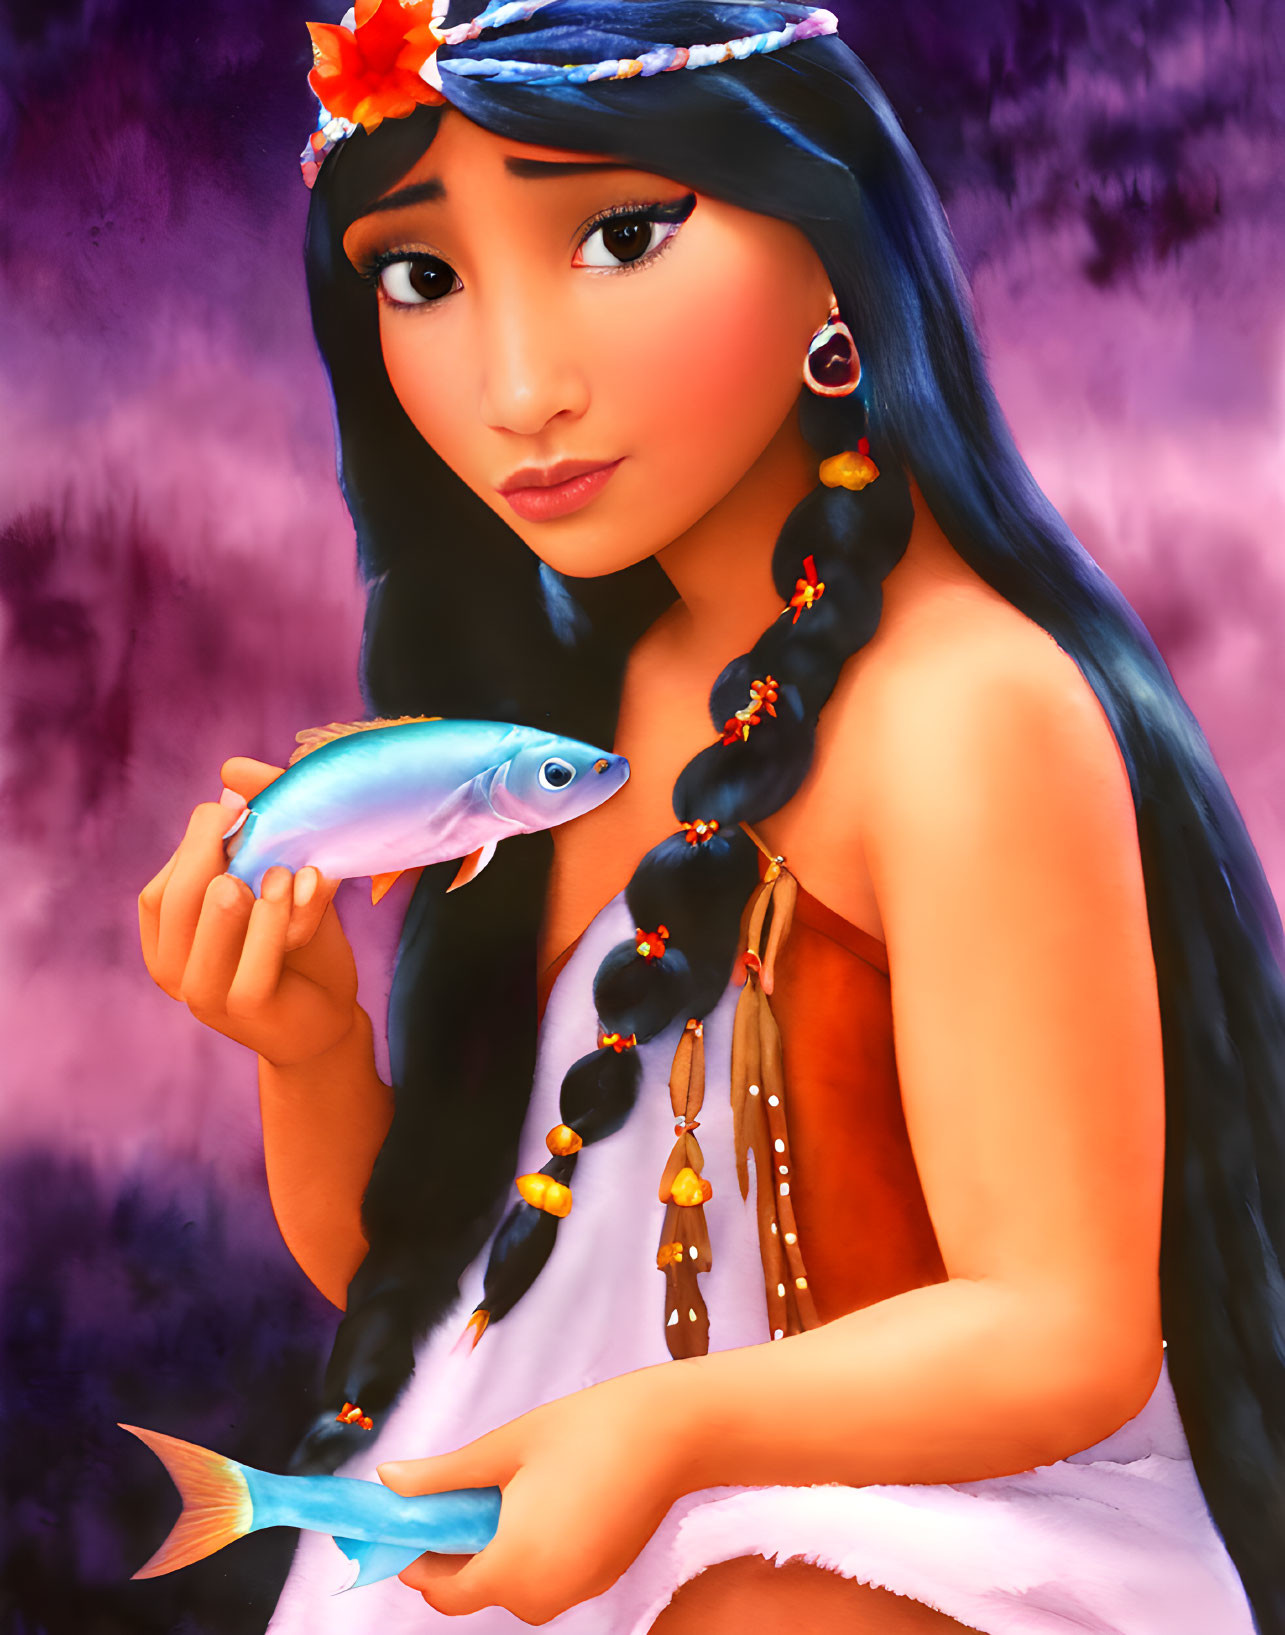 The native girl